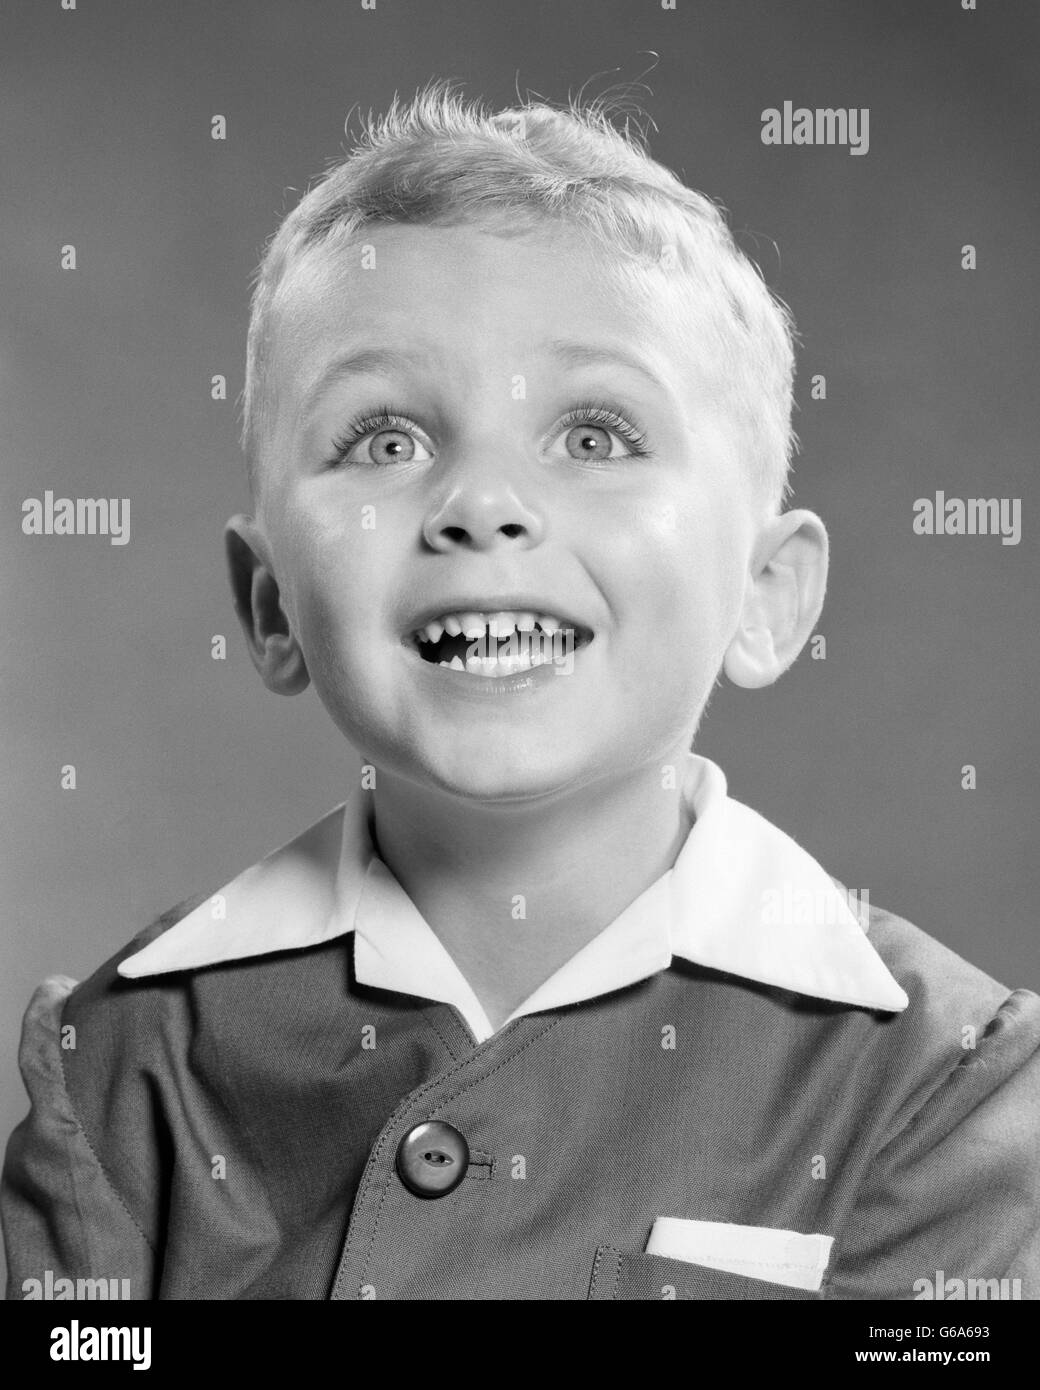 1950 PORTRAIT SMILING BLONDE BOY LOOKING UP AT CAMERA excité Banque D'Images